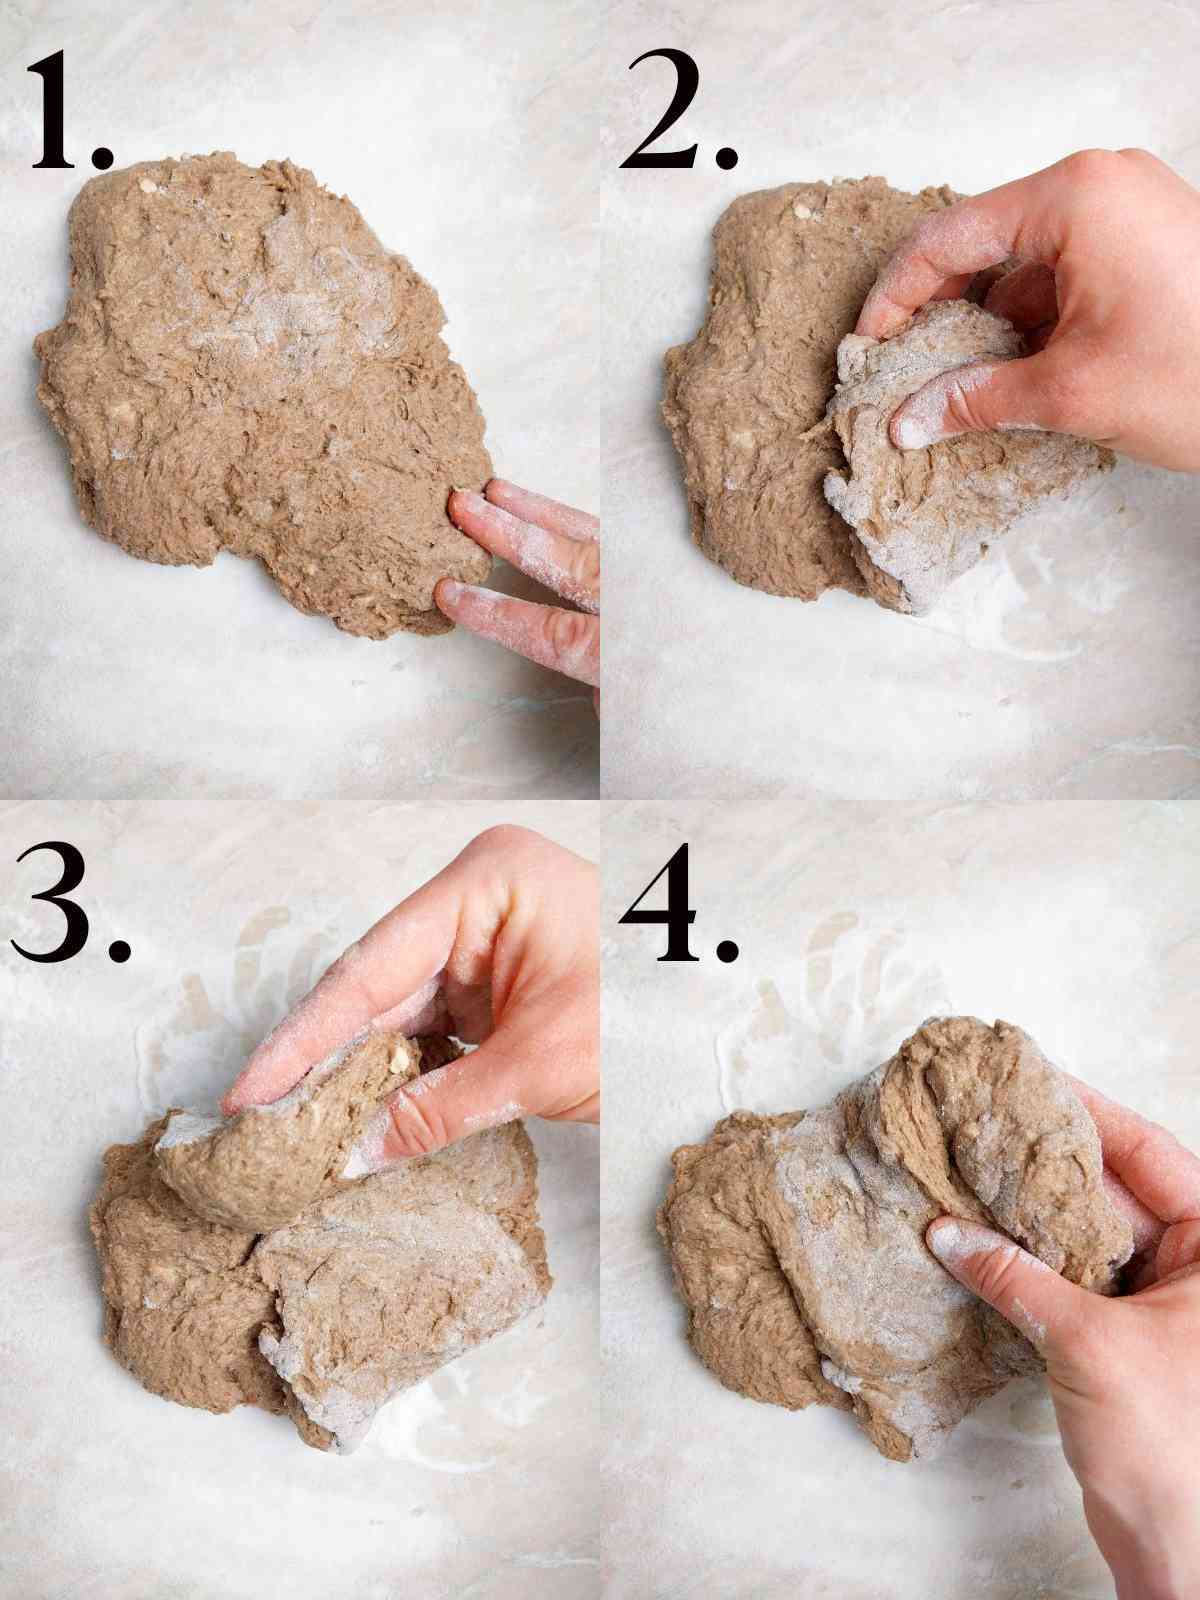 Shaping the dough into a ball.